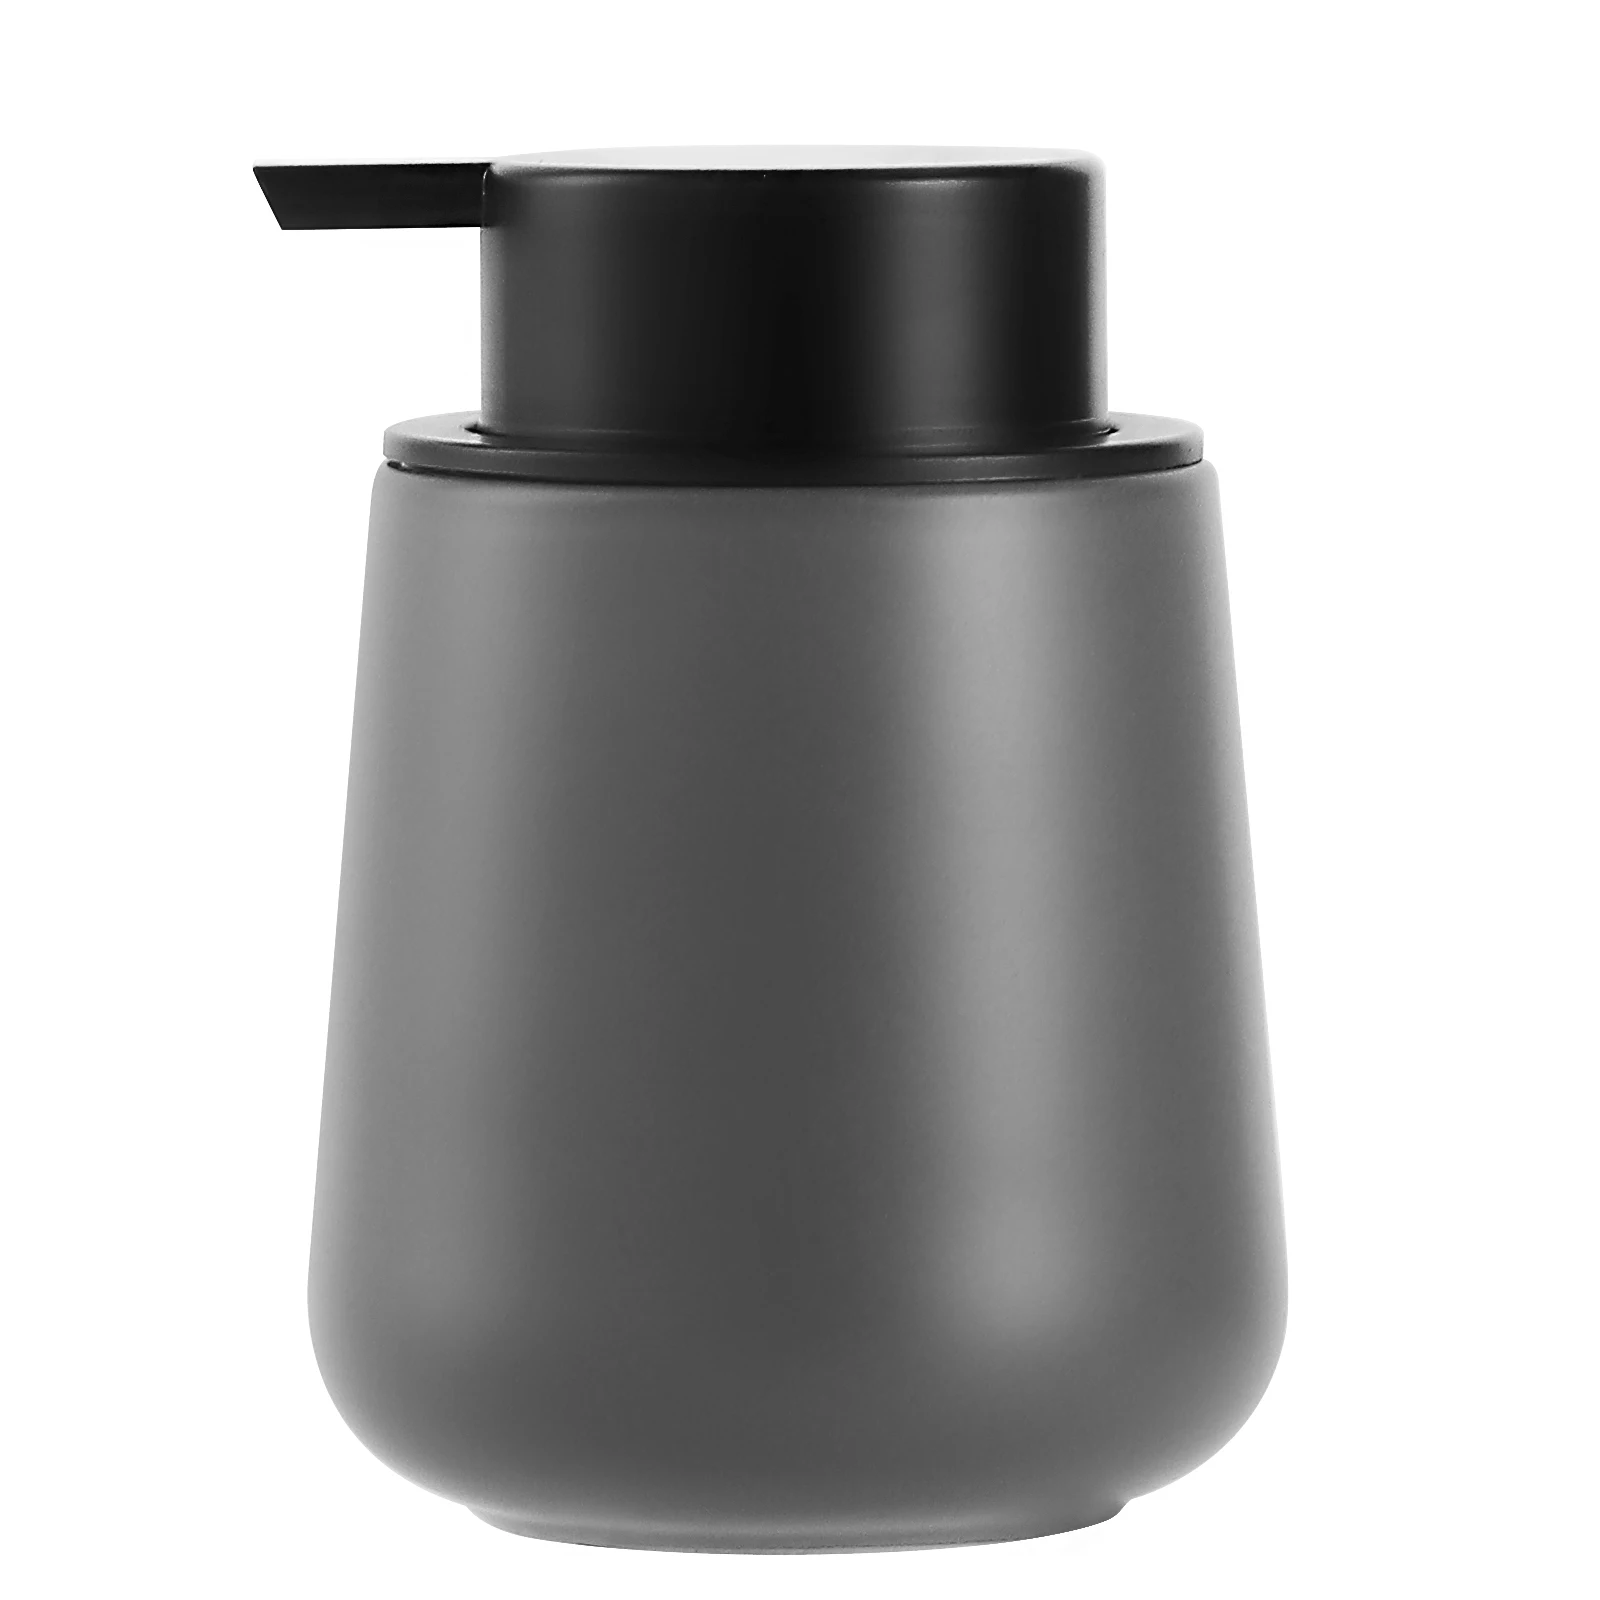 Soap Dispenser Hand Sanitzer Holder Liquid Hand Dish Lotion Shampoo Bottle Black Gray Ceramic Distributer Bathroom Accessories